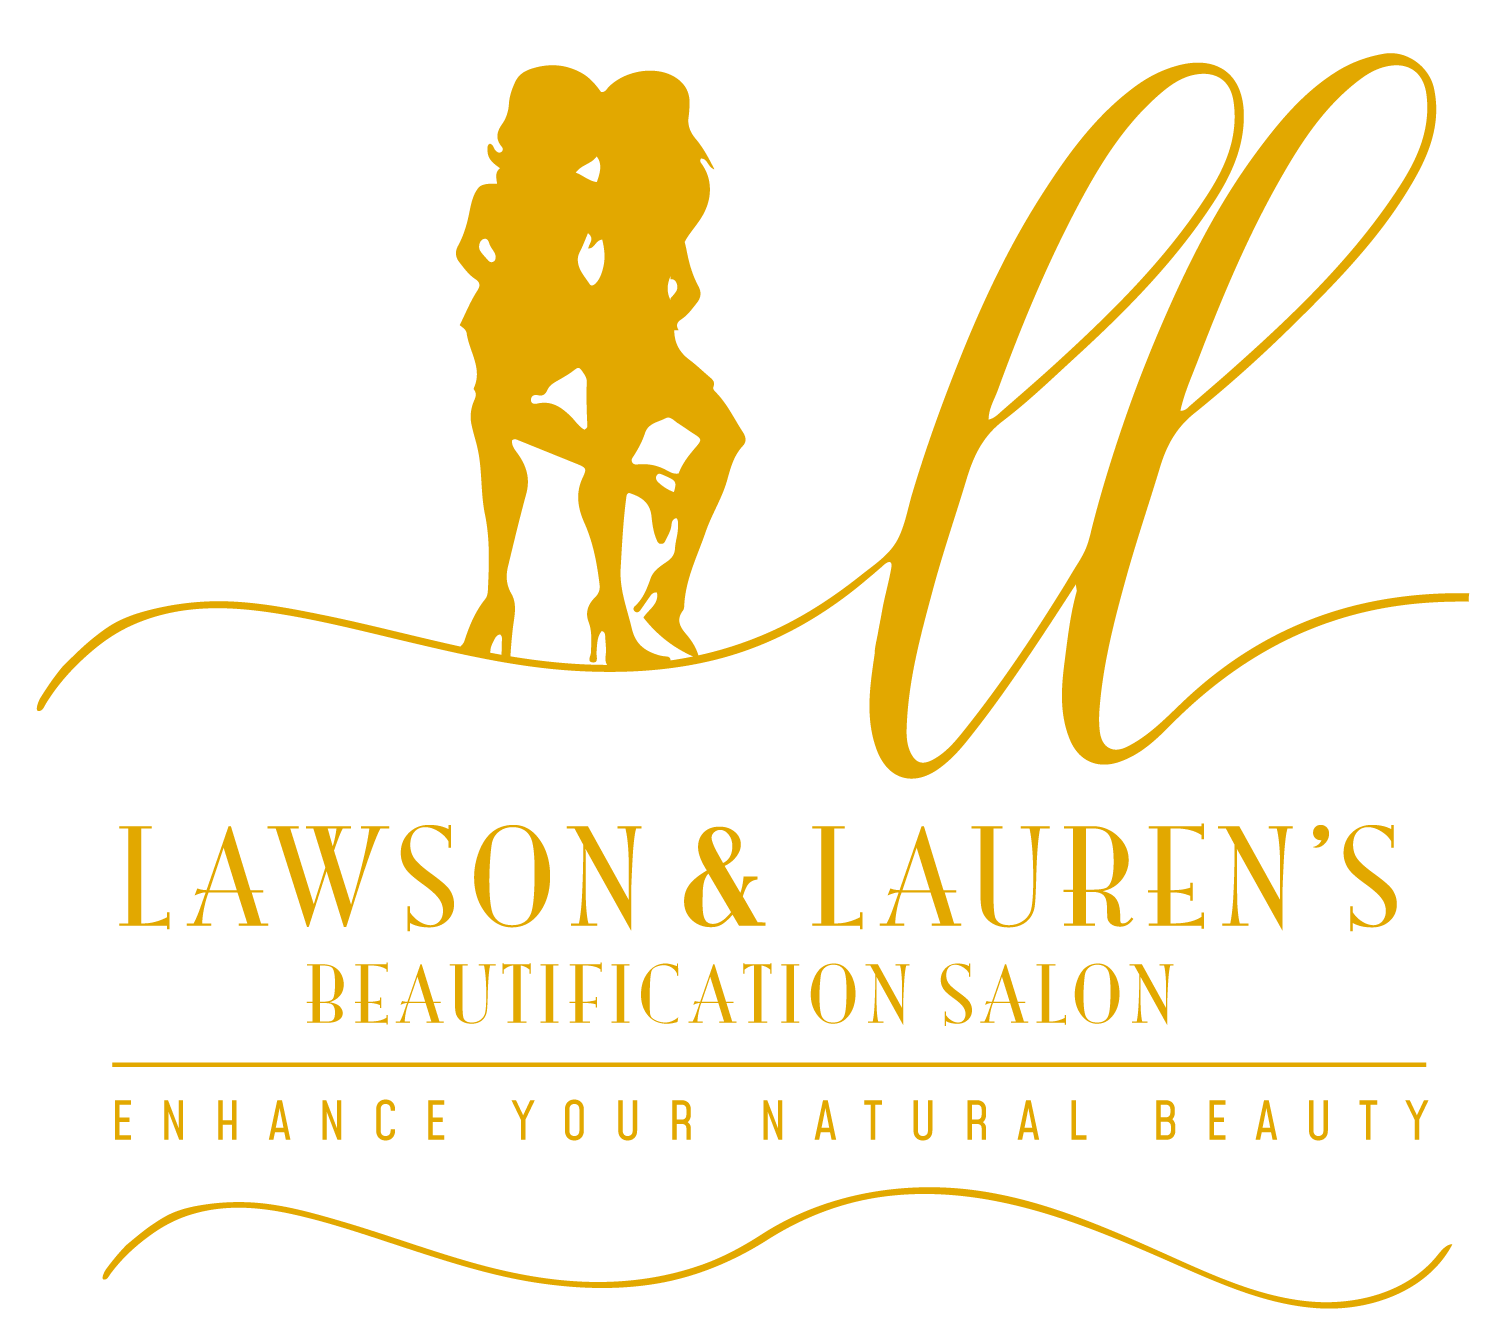 Lawson & Lauren's Beautification